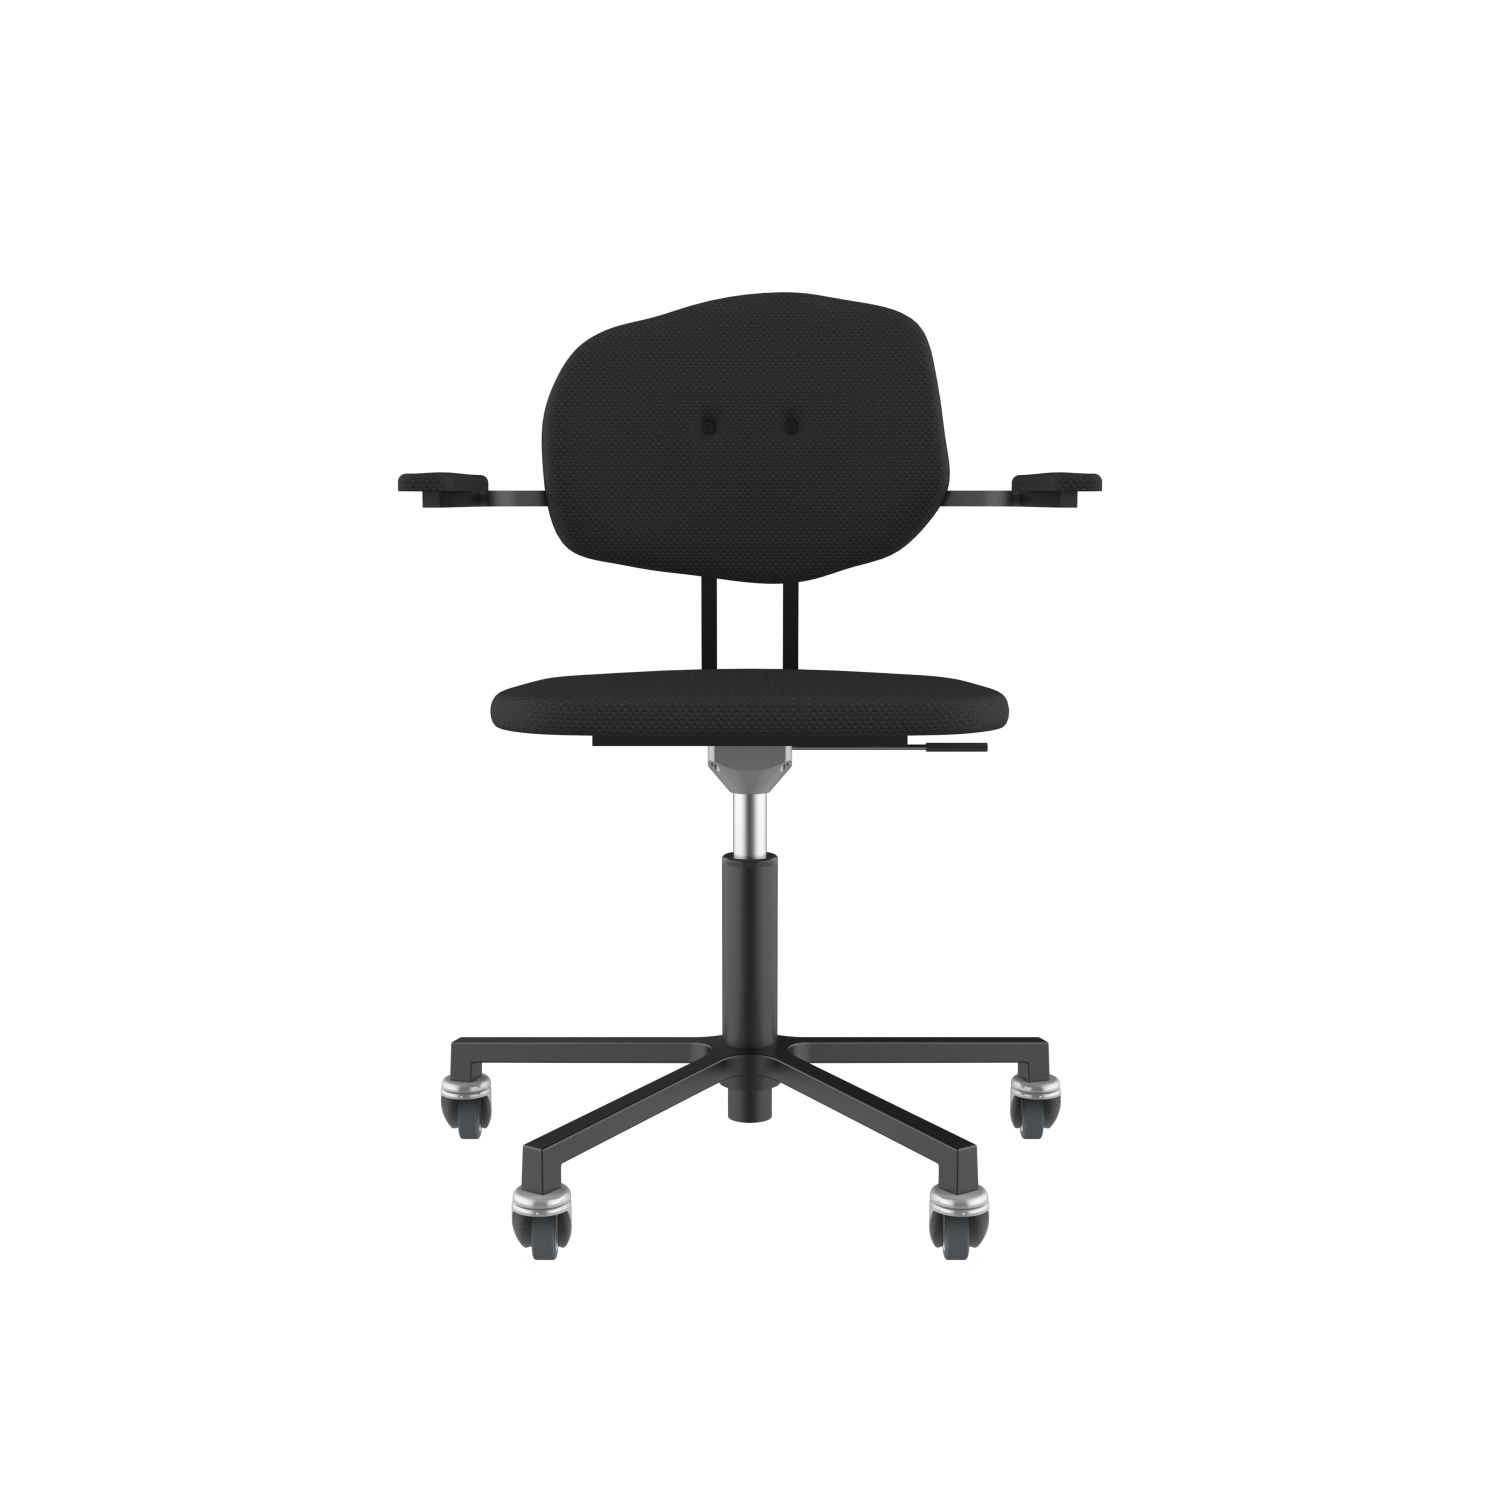 lensvelt maarten baas office chair with armrests backrest e havana black 090 black ral9005 soft wheels